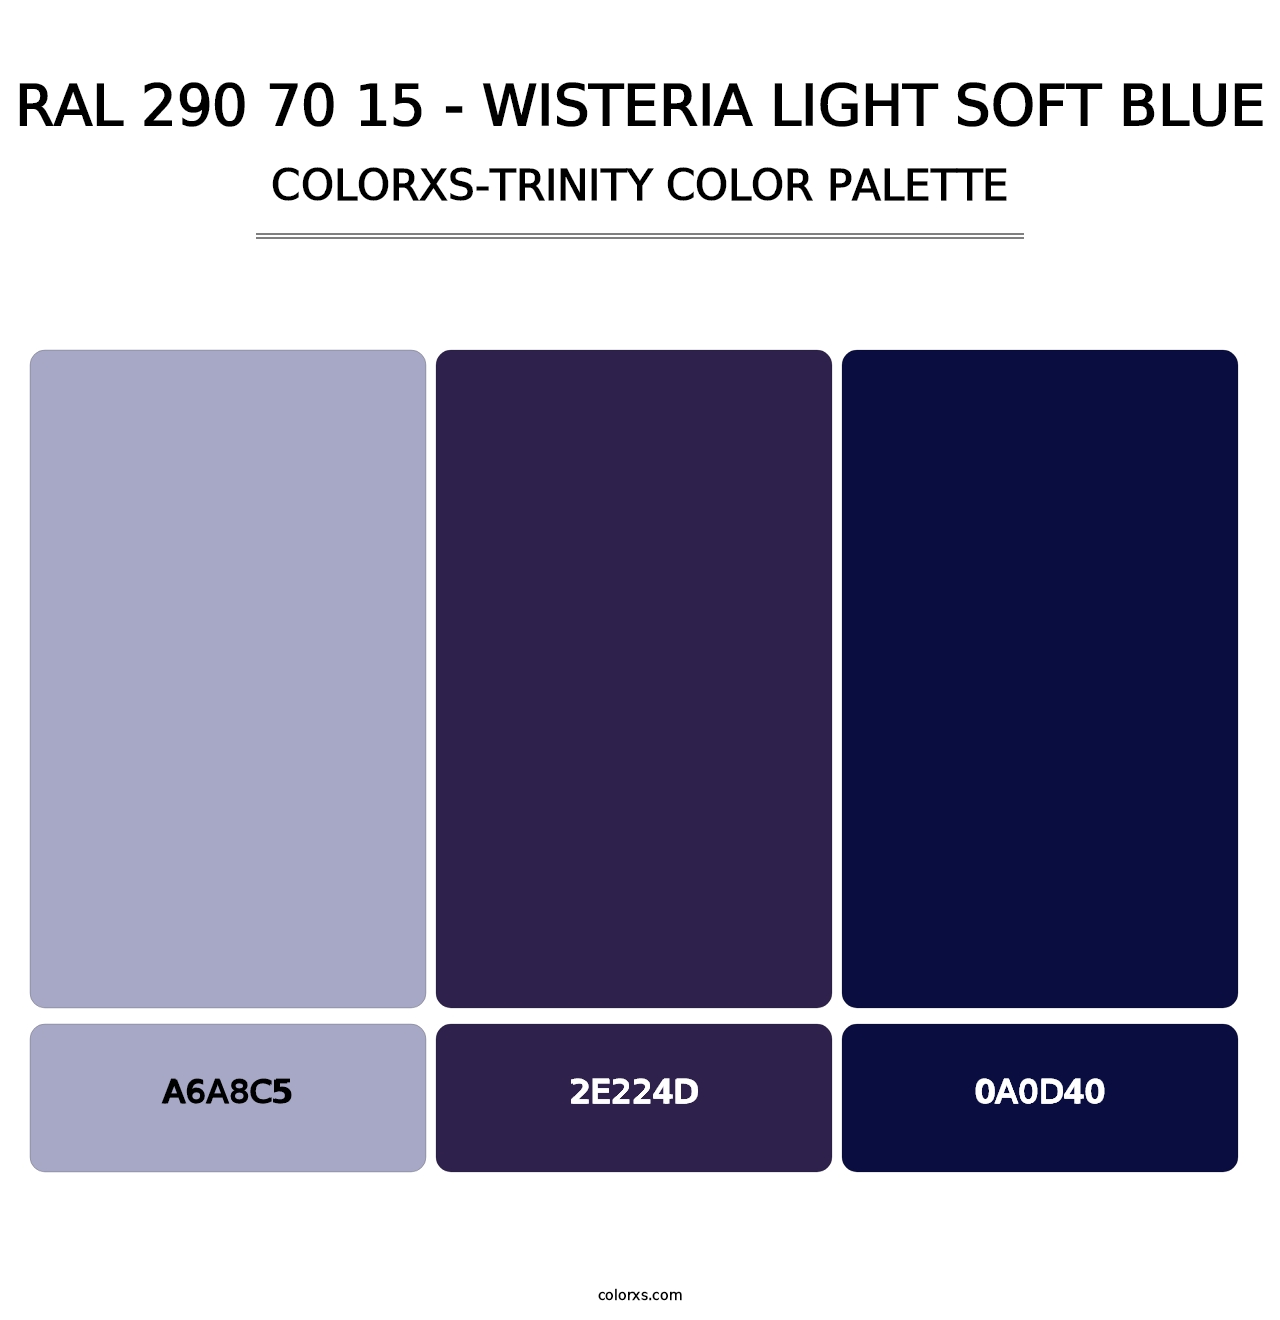 RAL 290 70 15 - Wisteria Light Soft Blue - Colorxs Trinity Palette